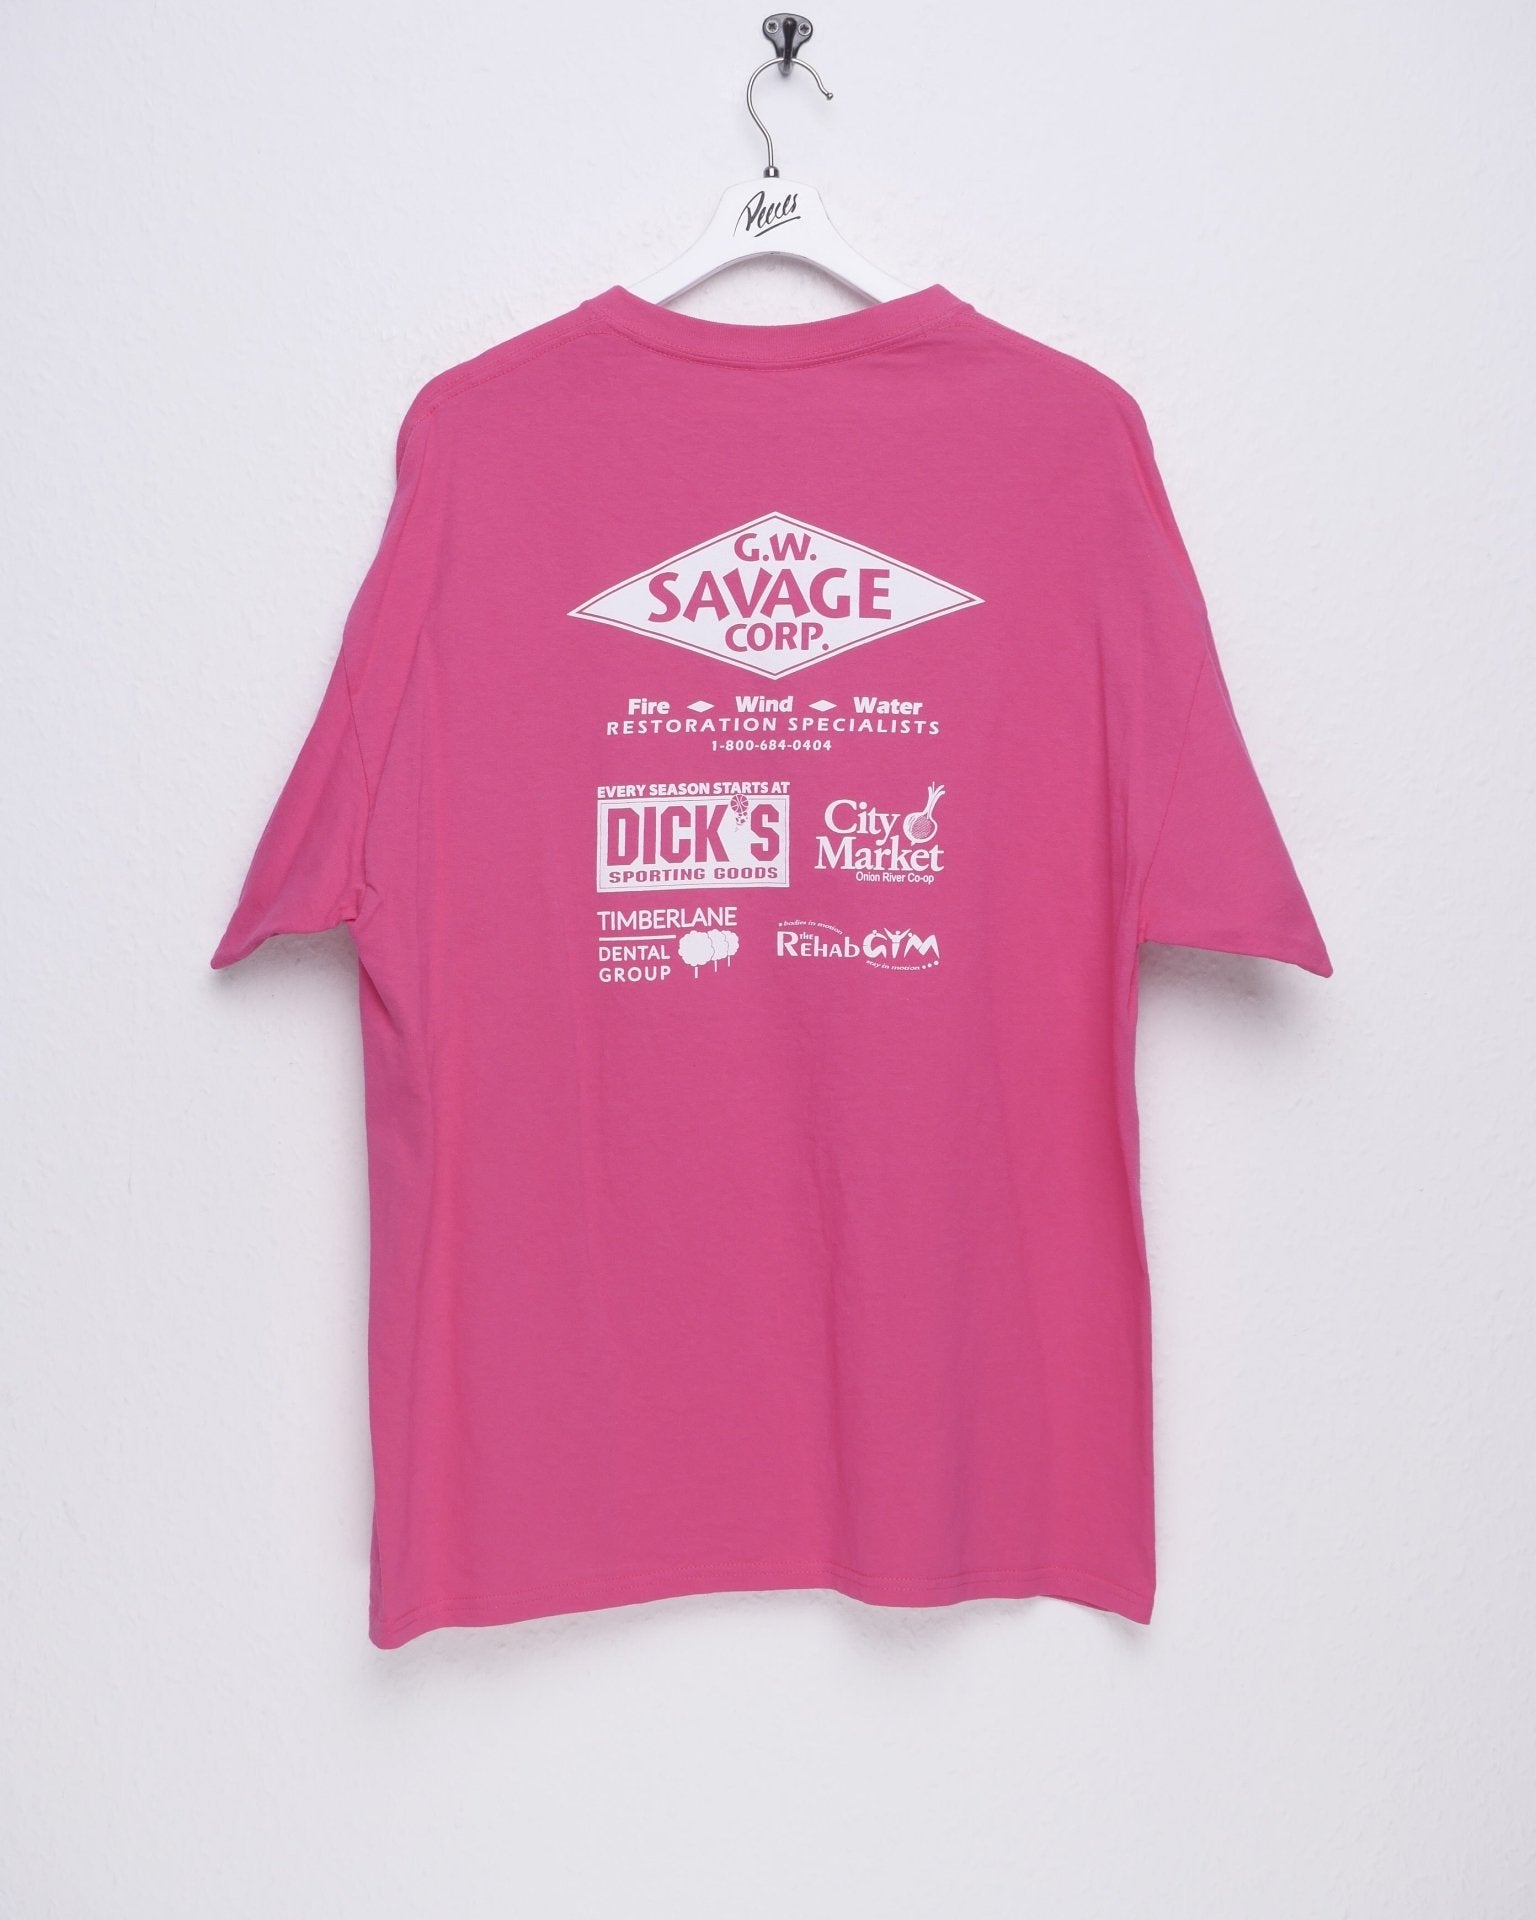 Versus Sports printed Graphic pink Shirt - Peeces